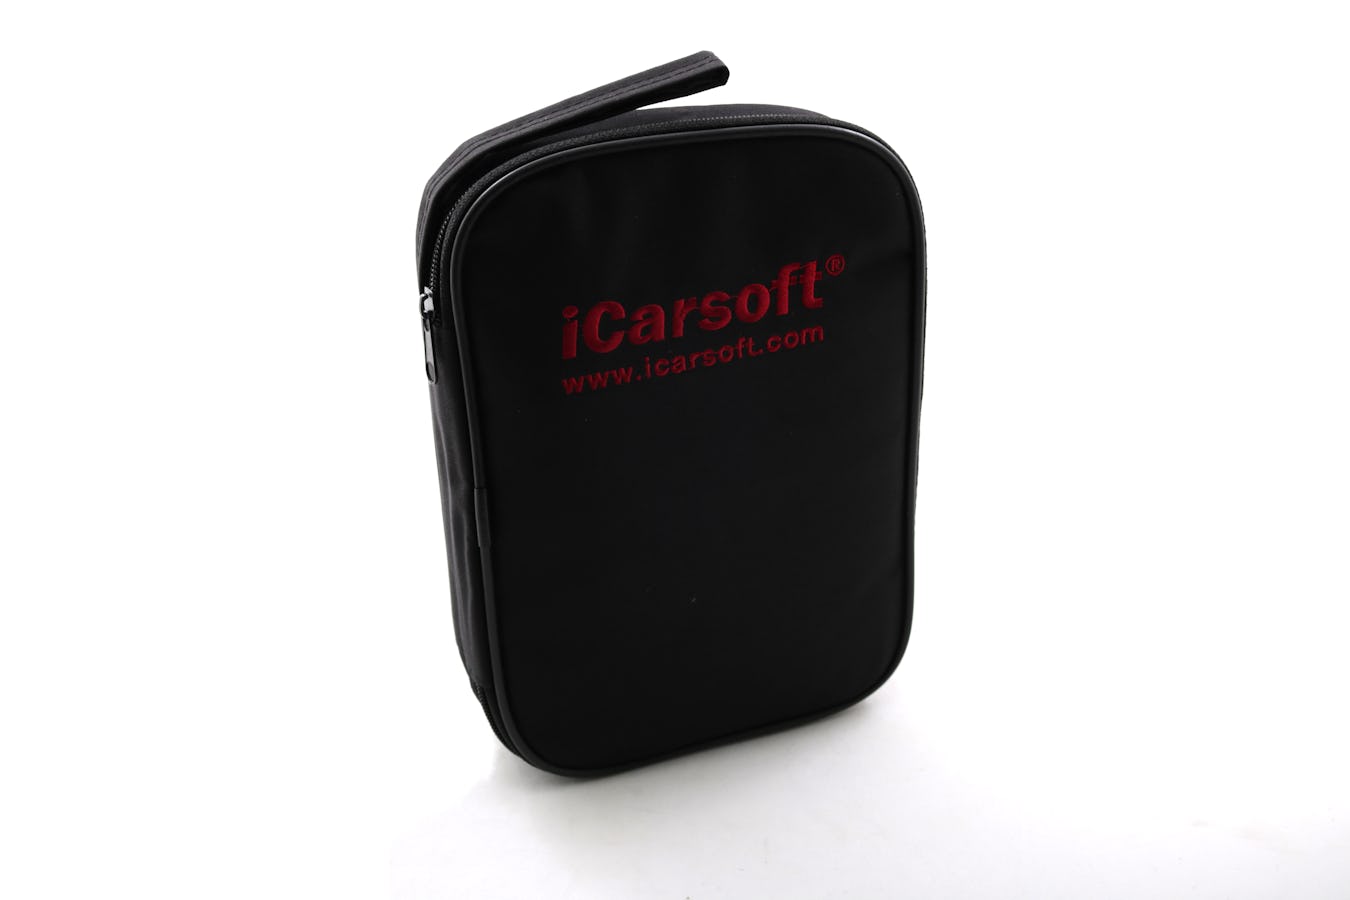 iCarsoft